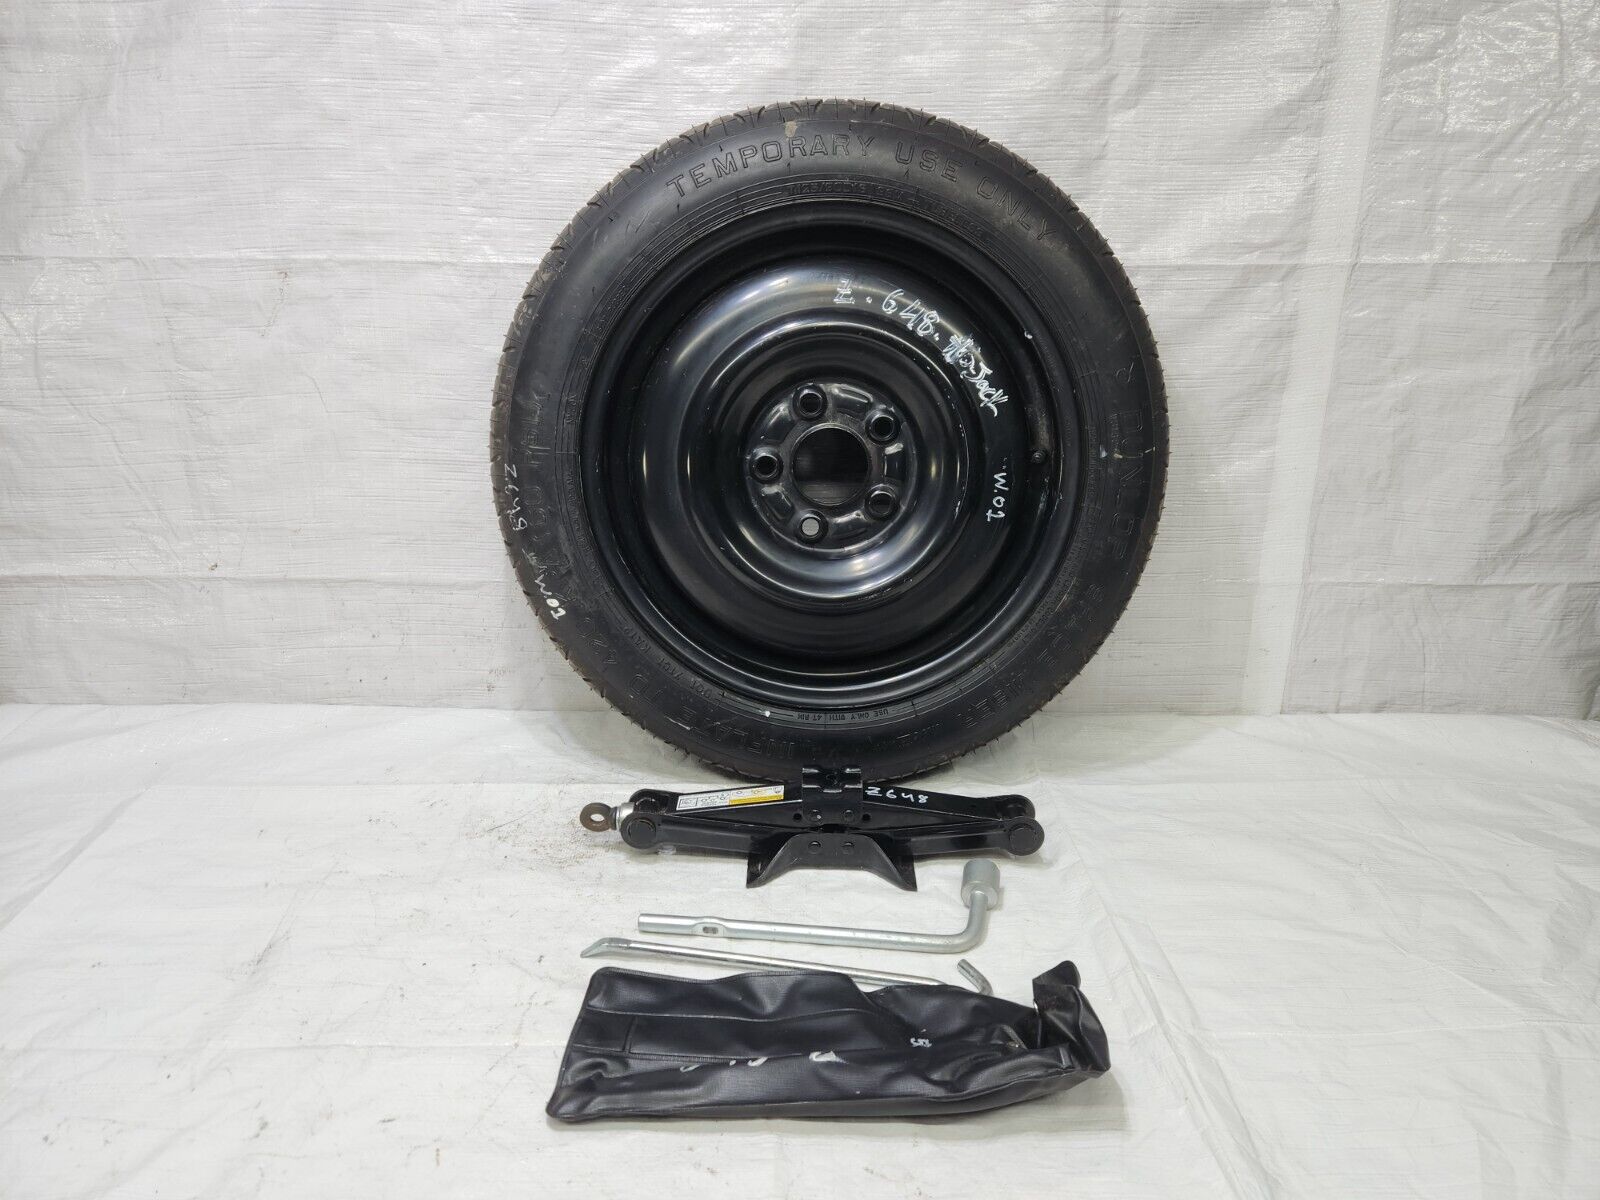 2014 Mitsubishi Lancer Spare Tire Wheel Rim Donut with Jack Tools OEM T125/90D16